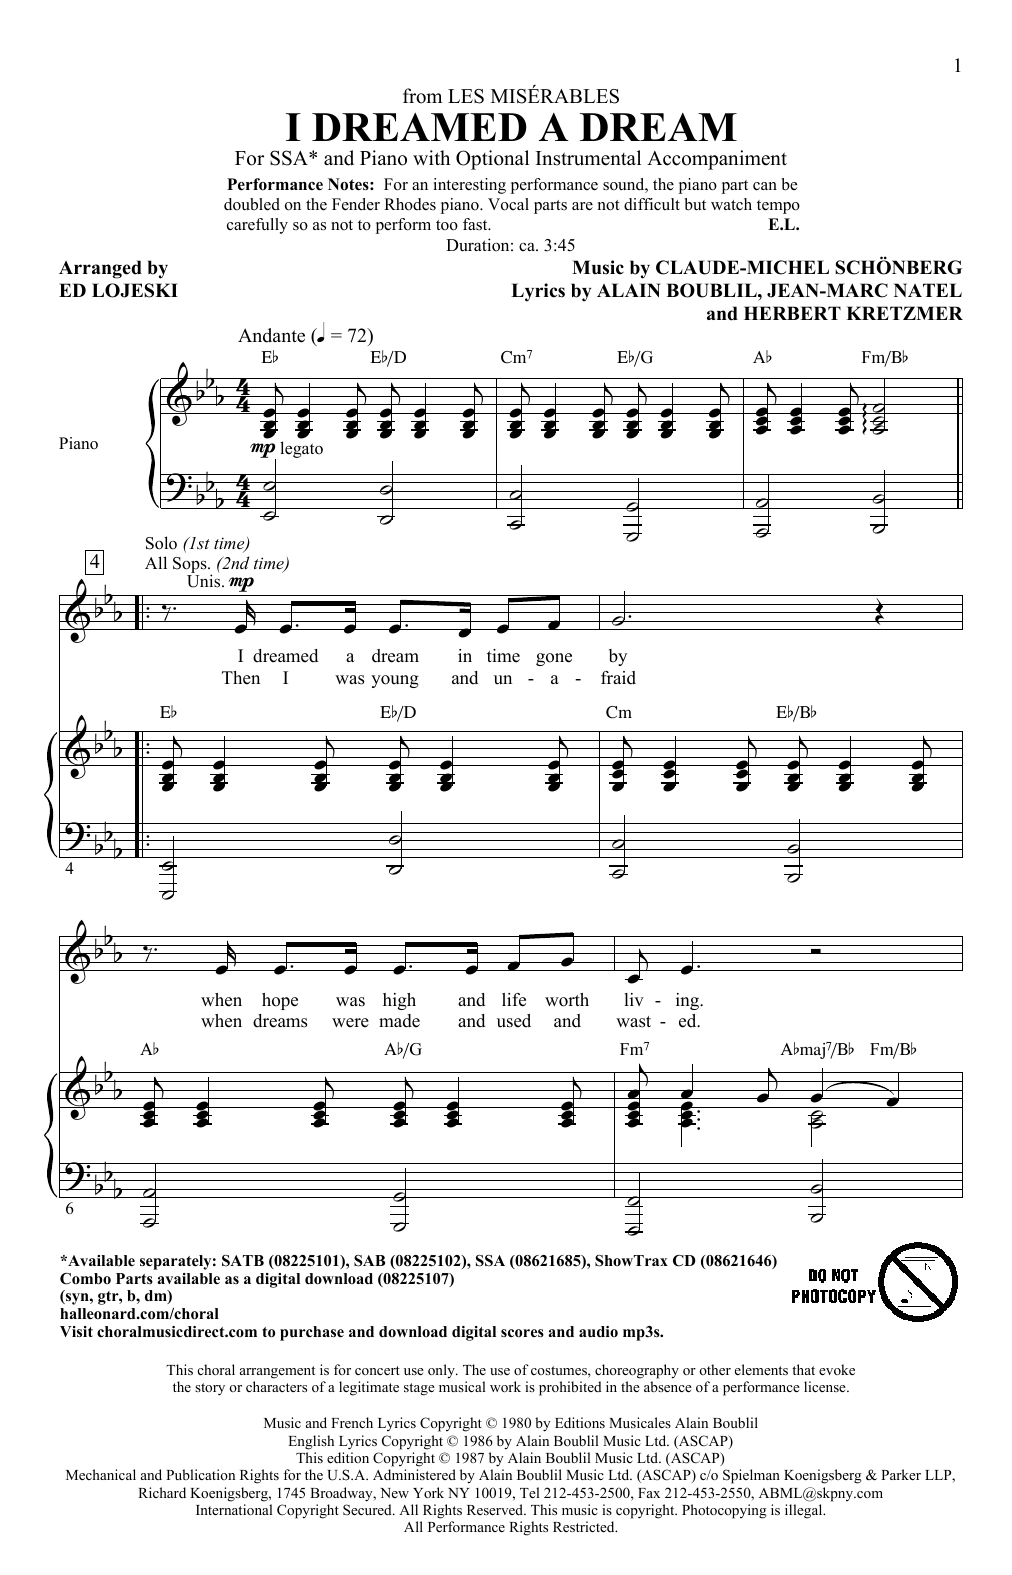 Boublil and Schonberg I Dreamed A Dream (from Les Miserables) (arr. Ed Lojeski) Sheet Music Notes & Chords for SAB - Download or Print PDF